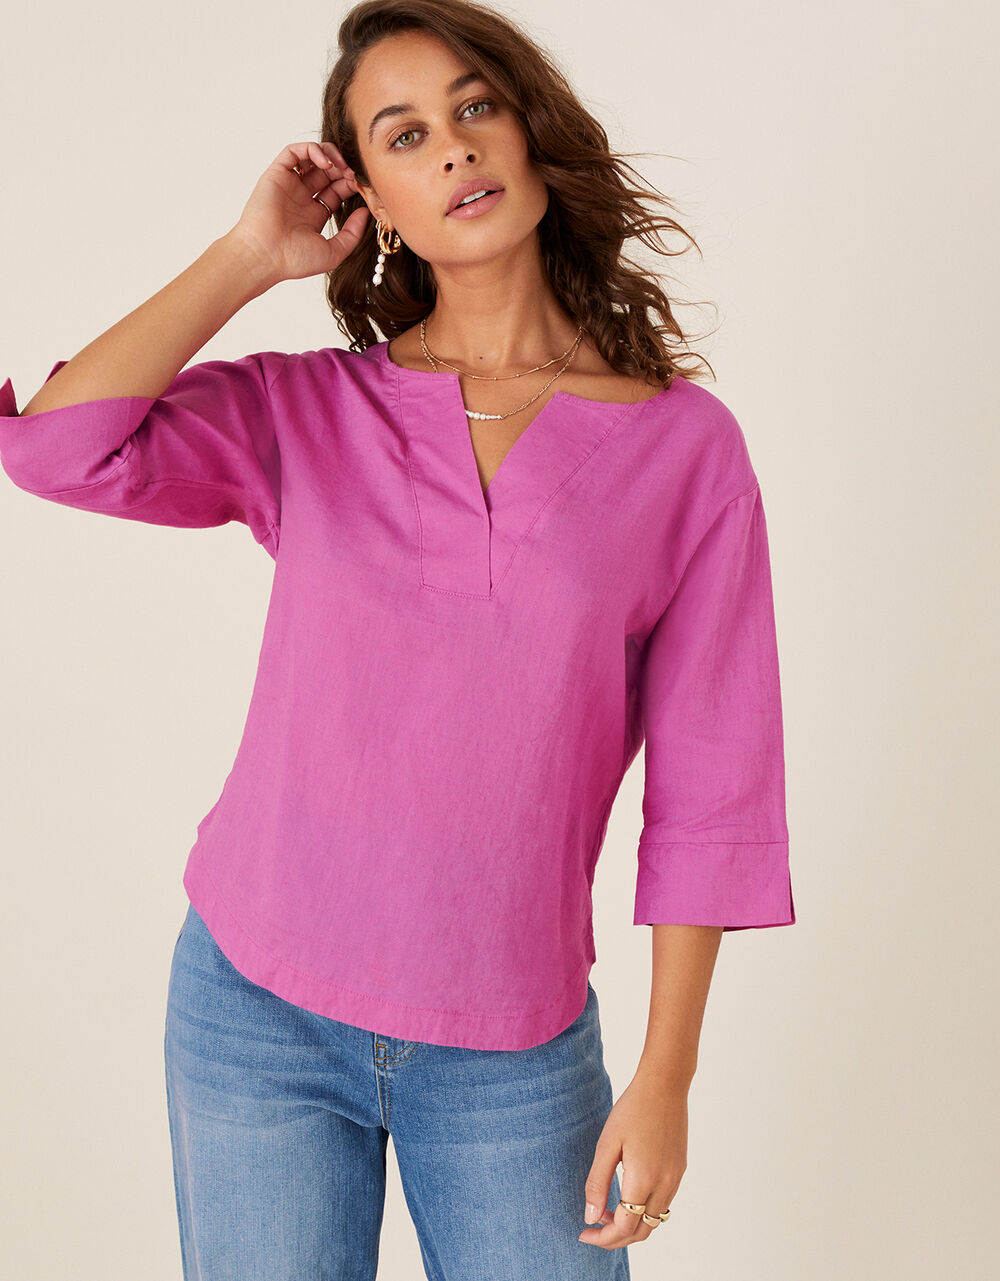 Women Women's Clothing | Daisy Plain T-Shirt in Pure Linen Pink - FG19702